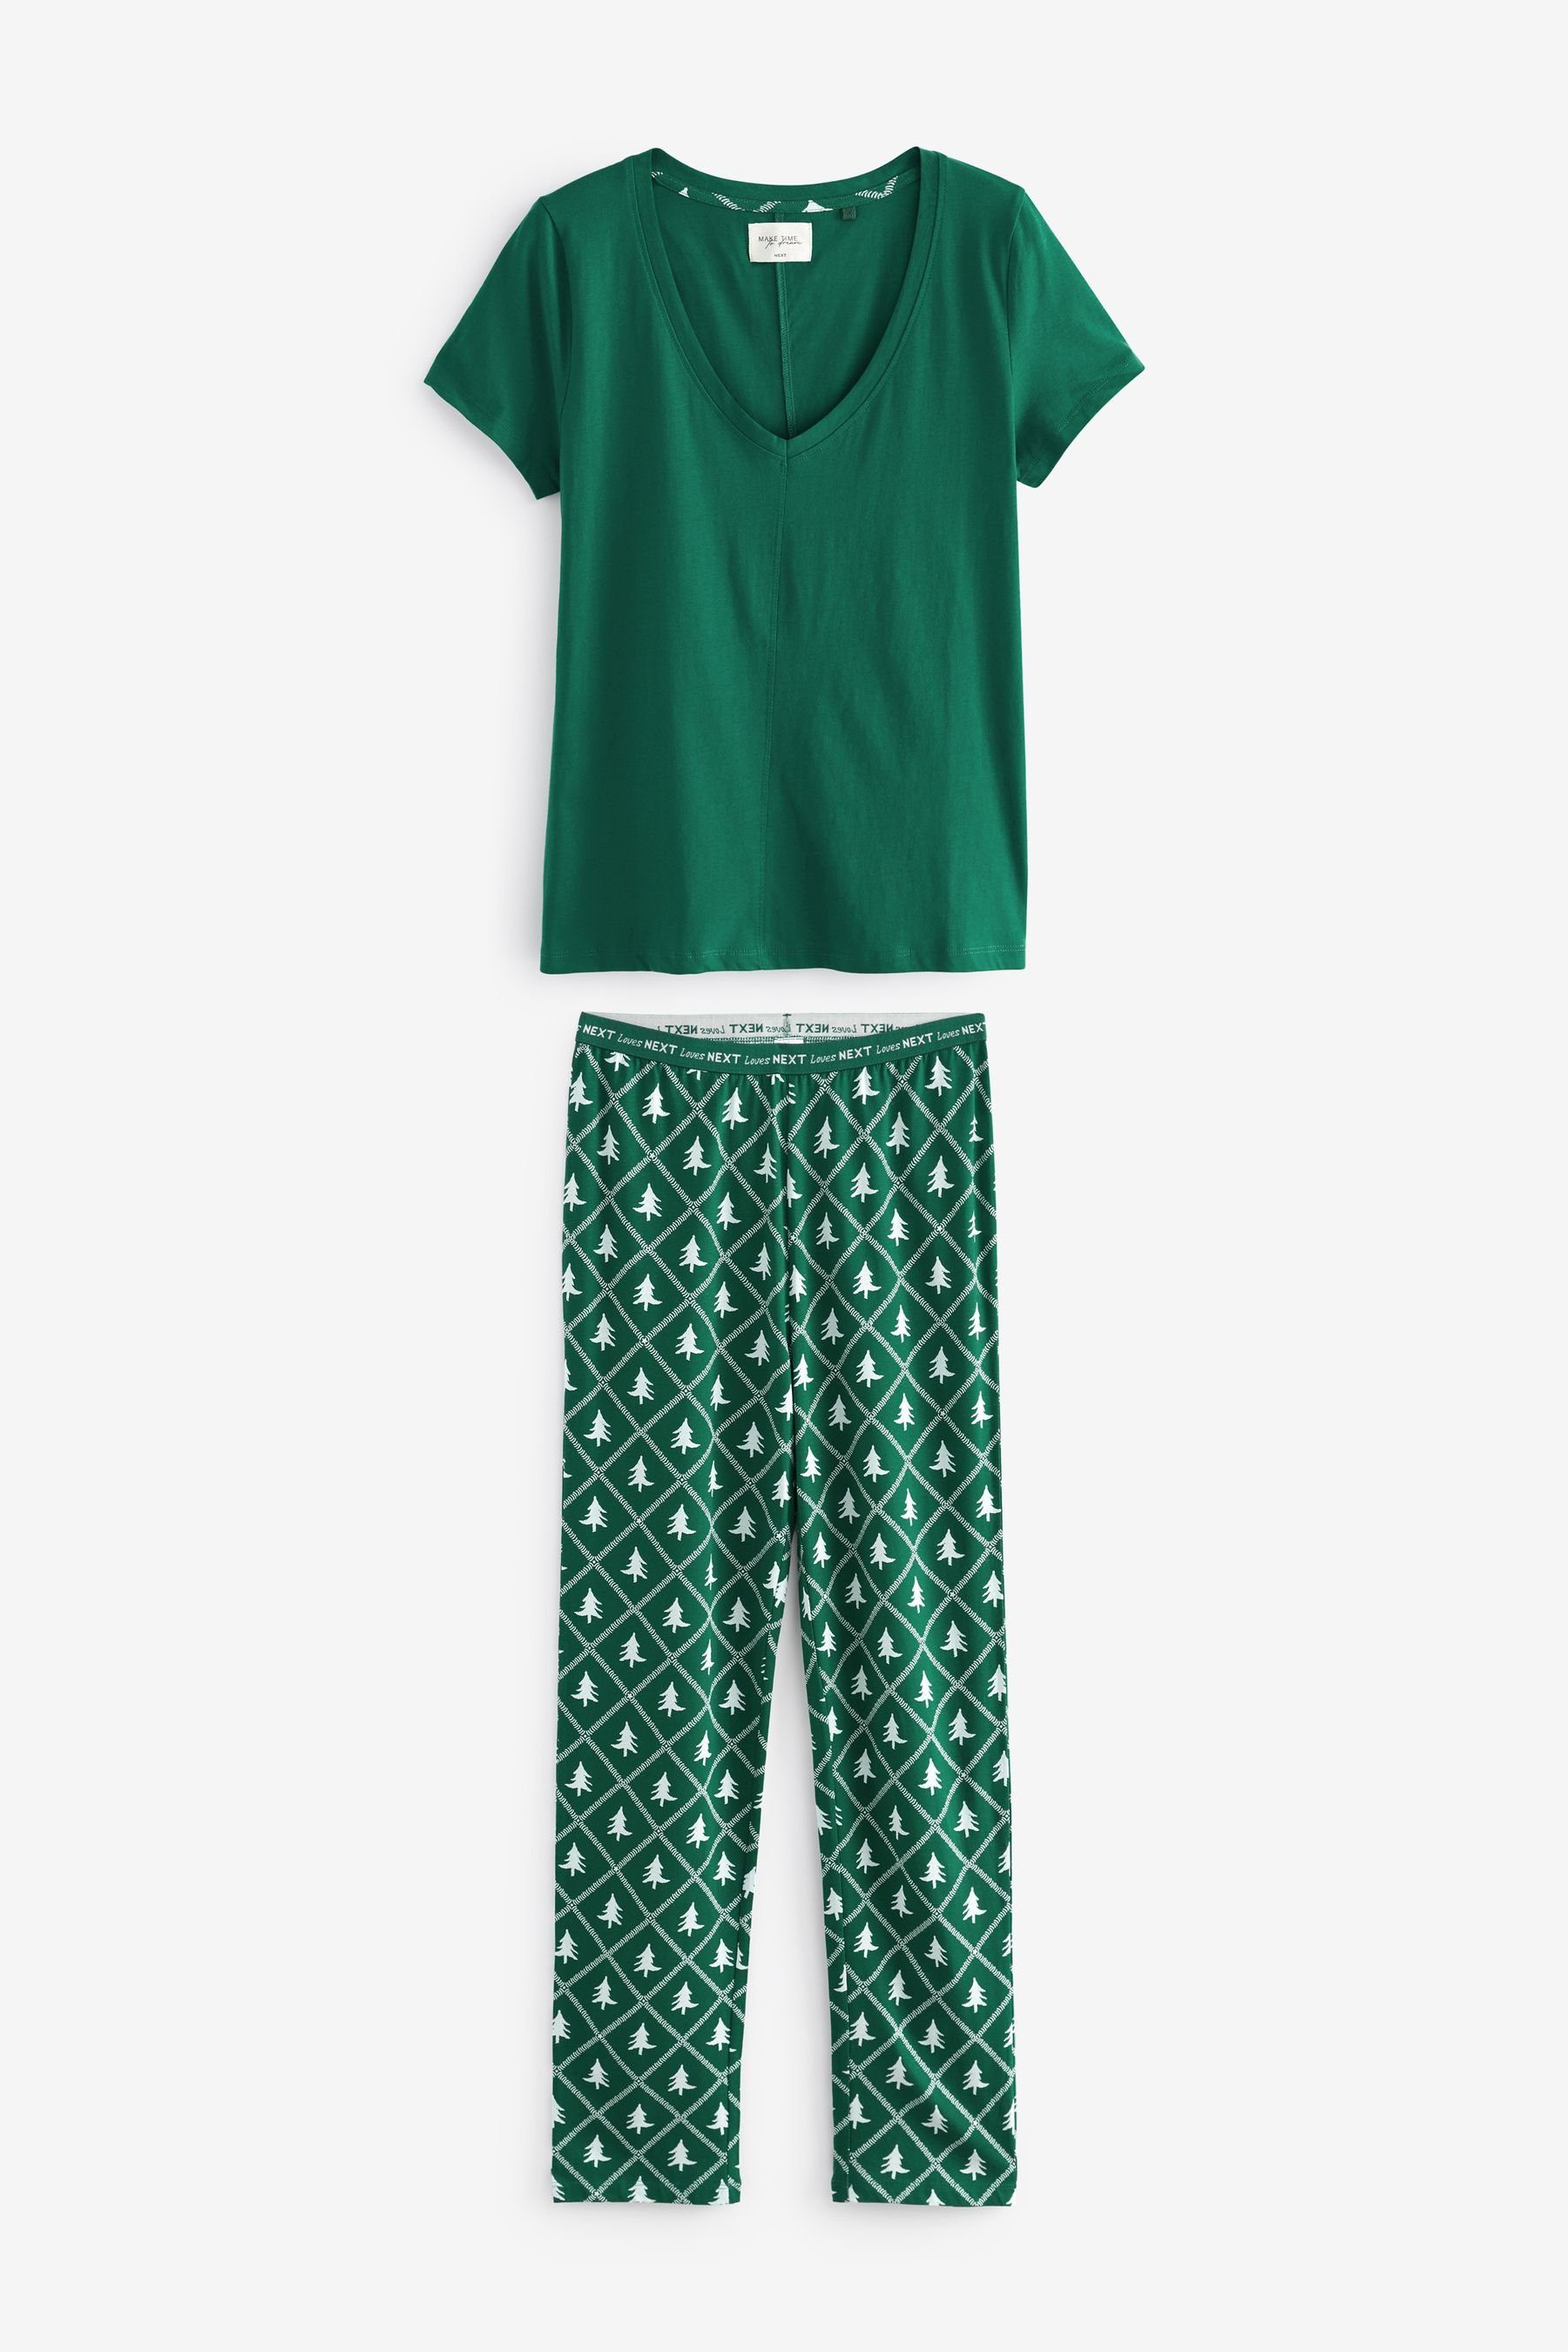 Next Tree (2 Christmas Kurzärmeliger Pyjama Green Baumwoll-Pyjama tlg)